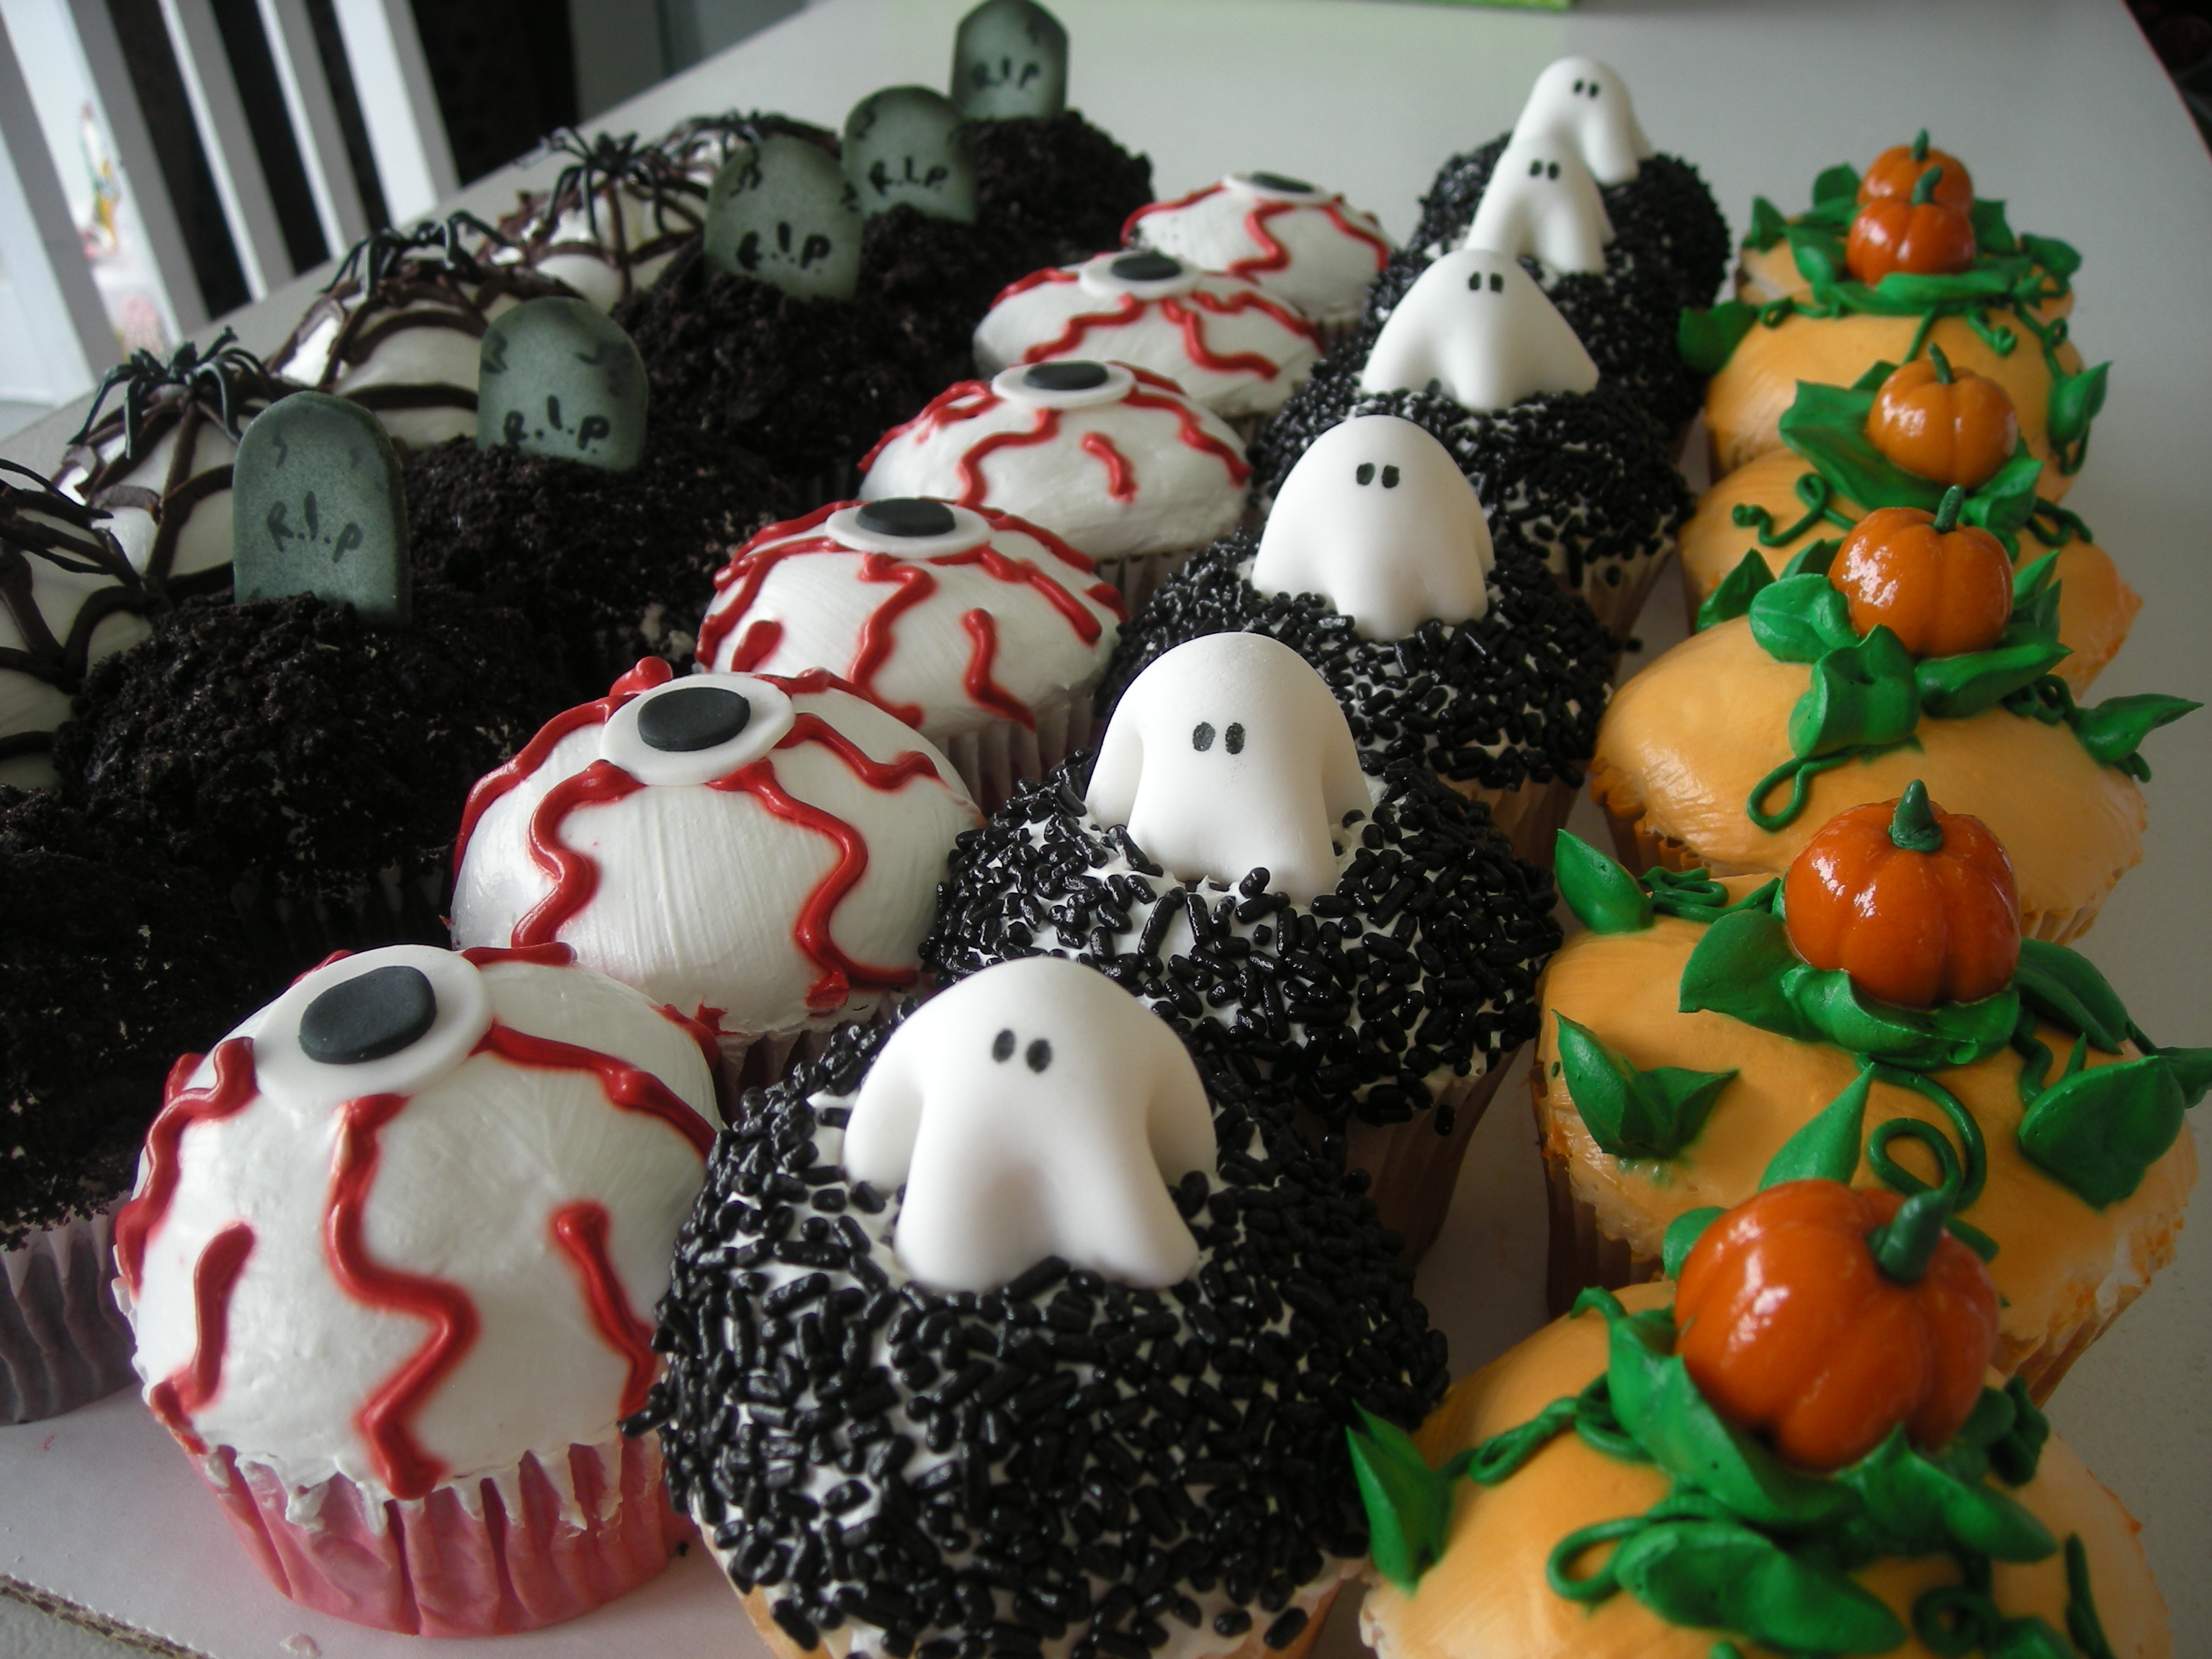 Spooky-cupcakes